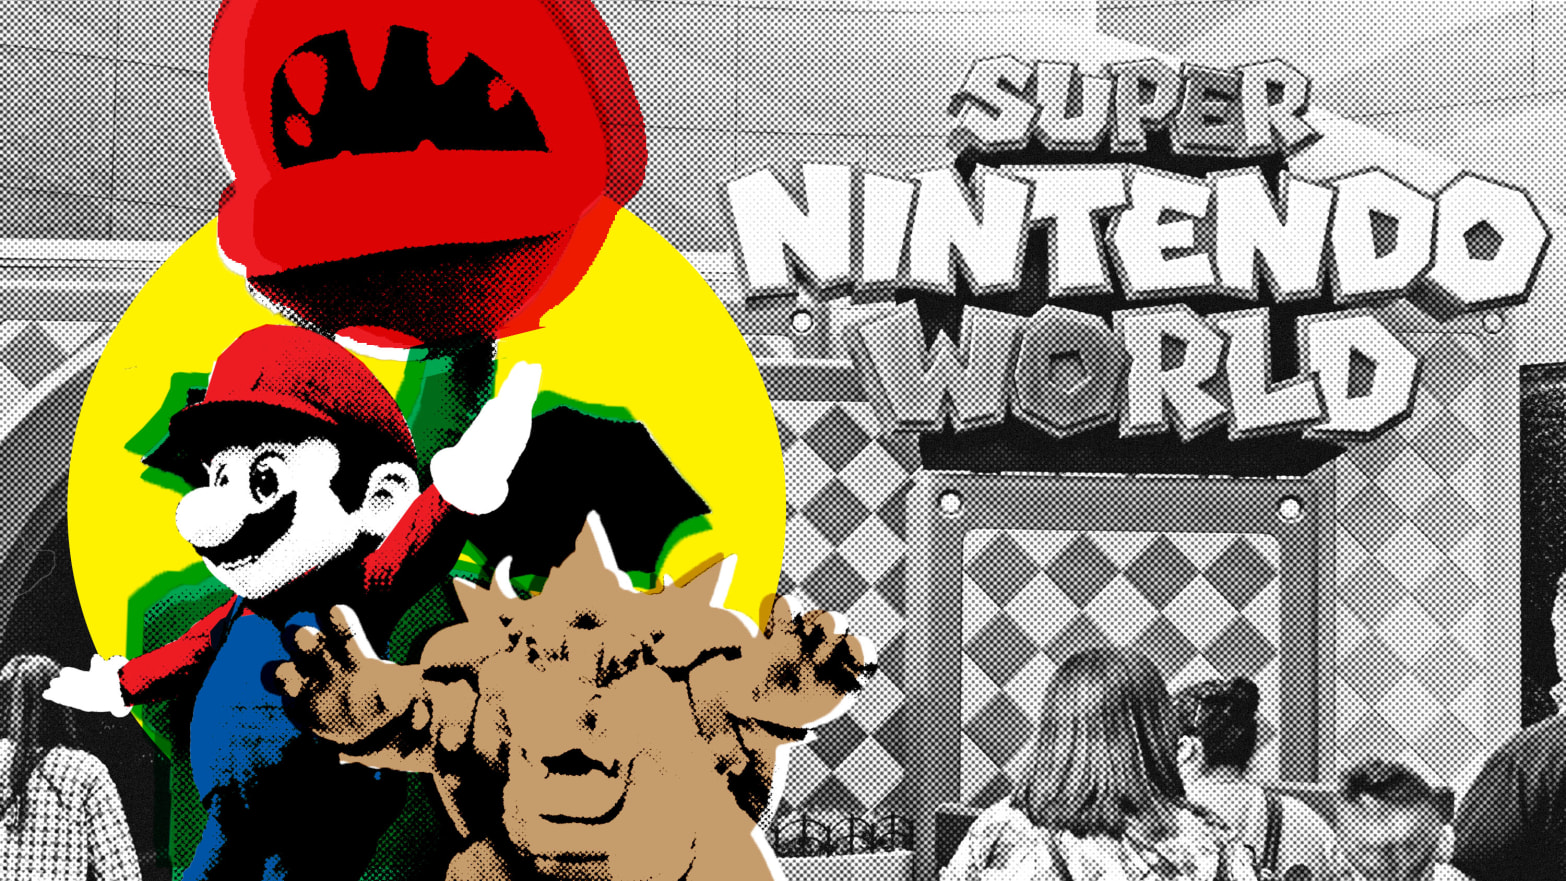 Super Mario World - Super Nintendo | Super Nintendo | GameStop